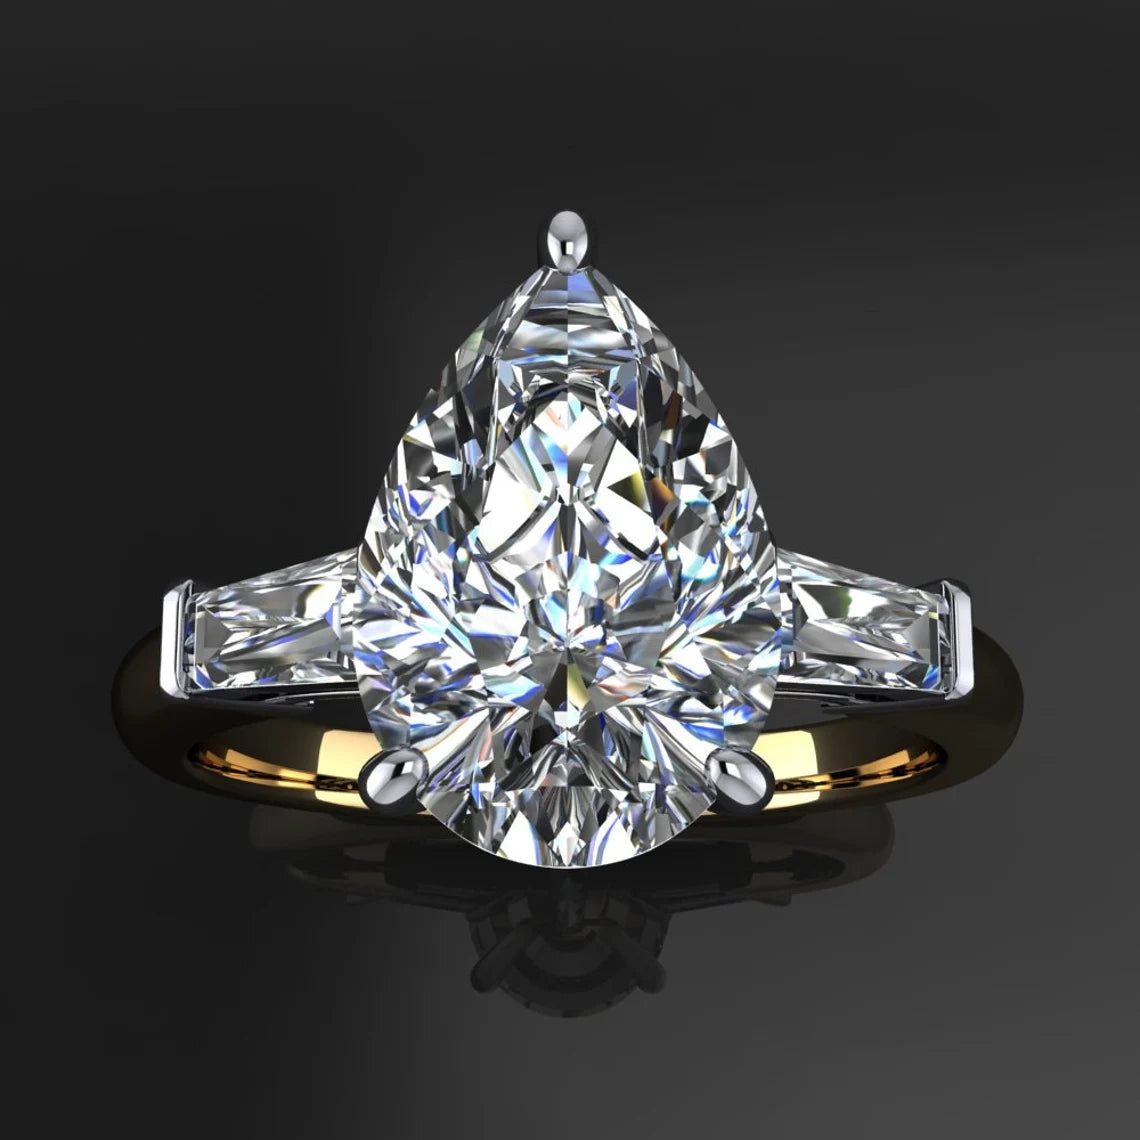 laurel ring – 3.5 carat pear cut moissanite engagement ring, NEO moissanite - J Hollywood Designs